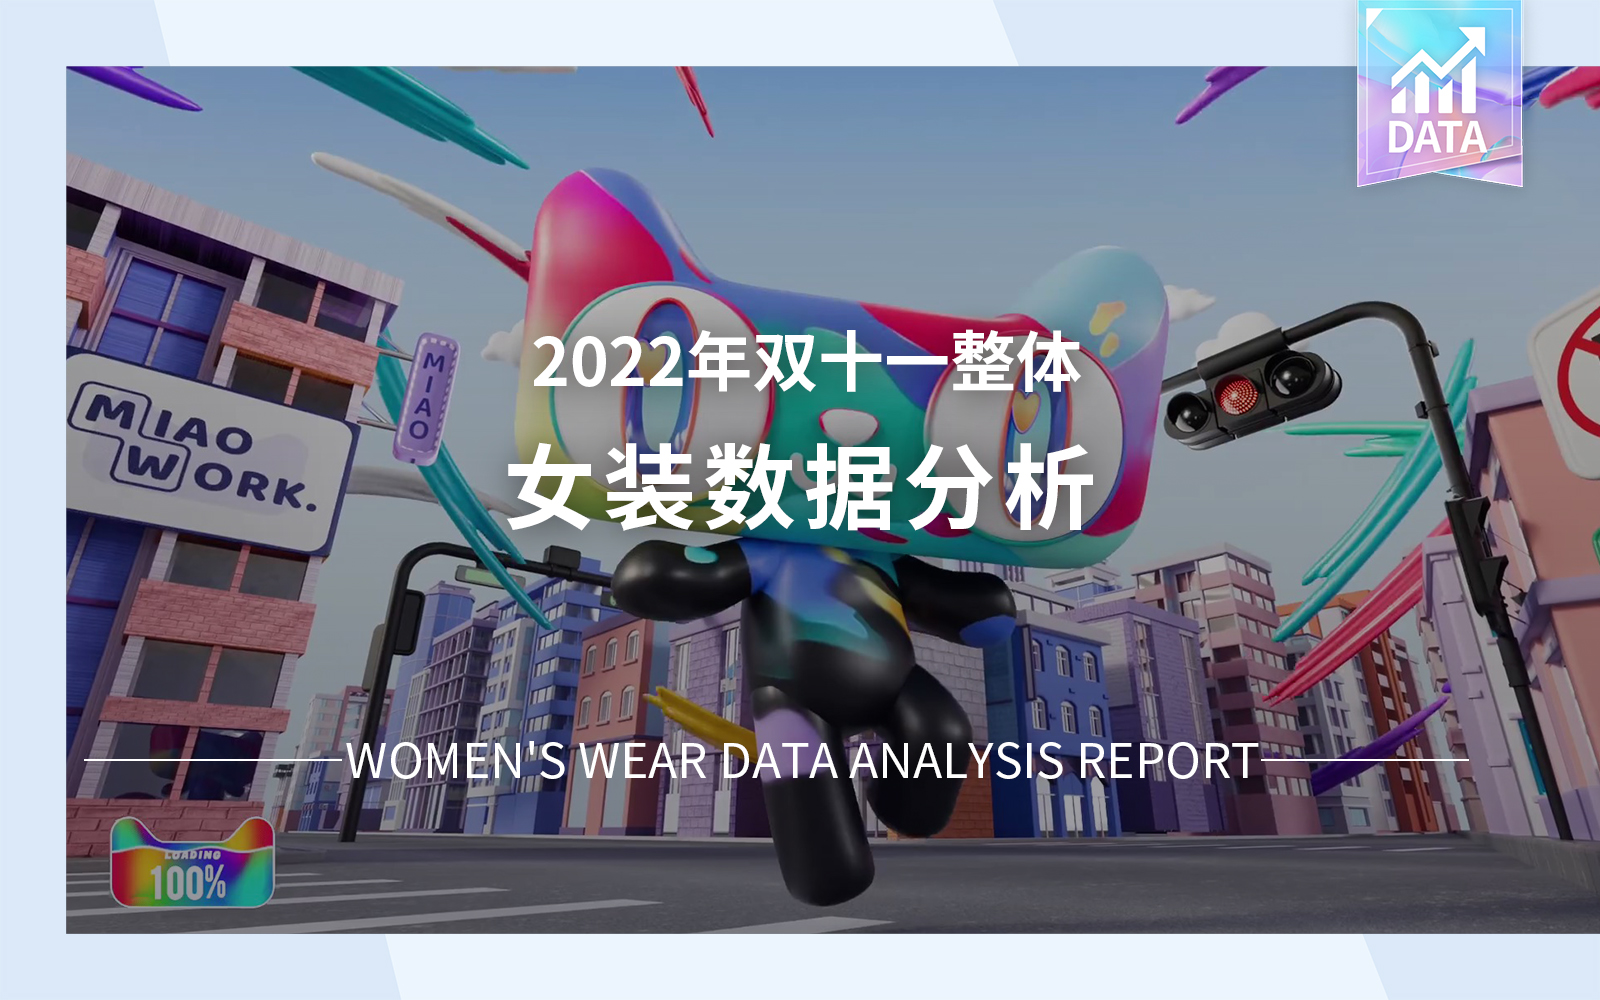 2022 Double 11 Shopping Festival Data Analysis of Womenswear